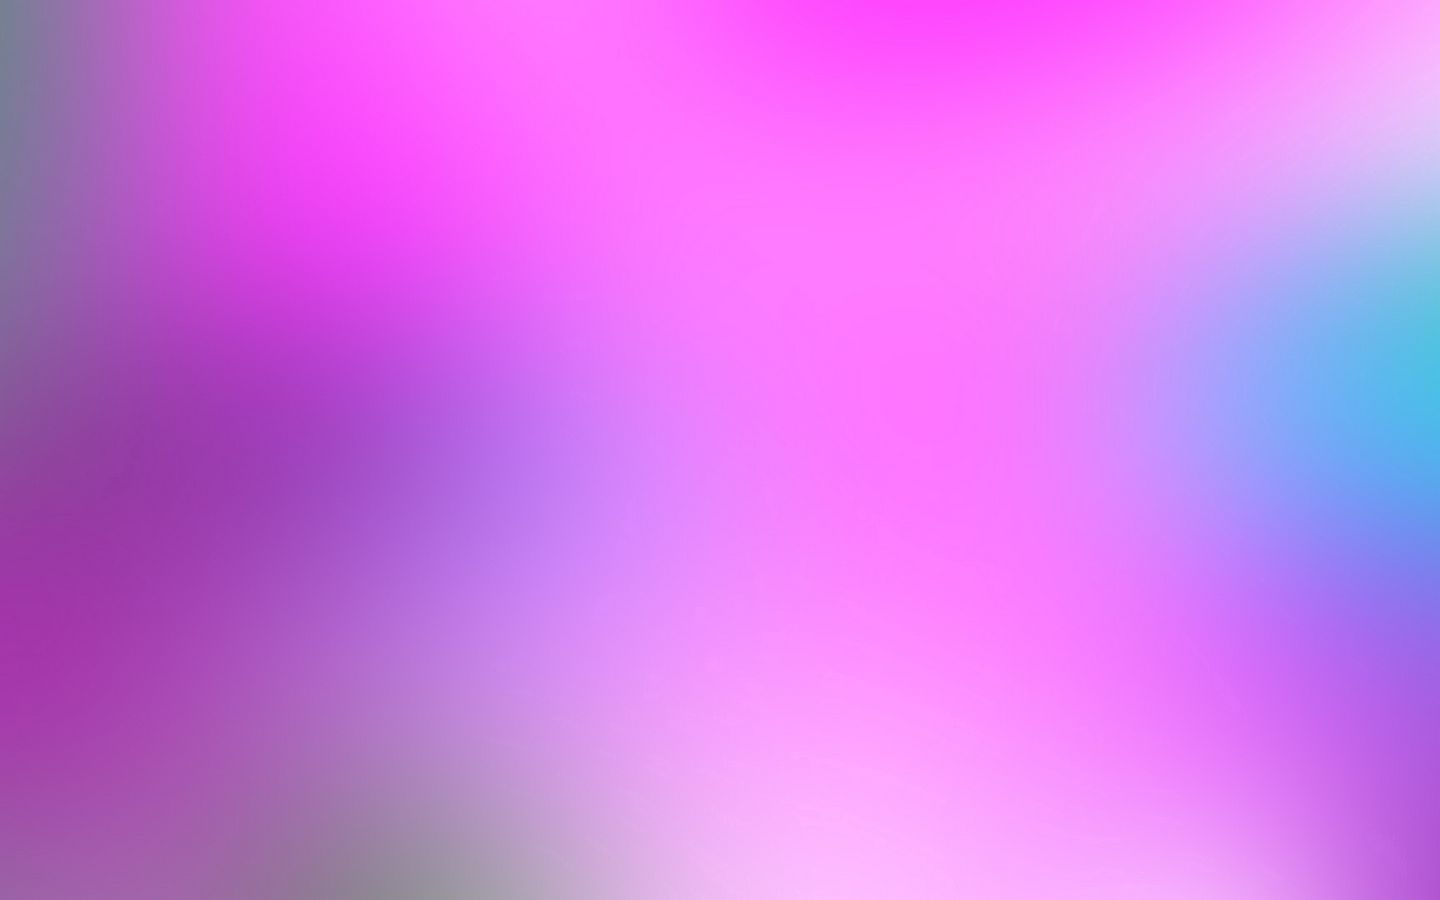 Download wallpaper 1440x900 pink, blue, white, spot widescreen 16:10 hd ...